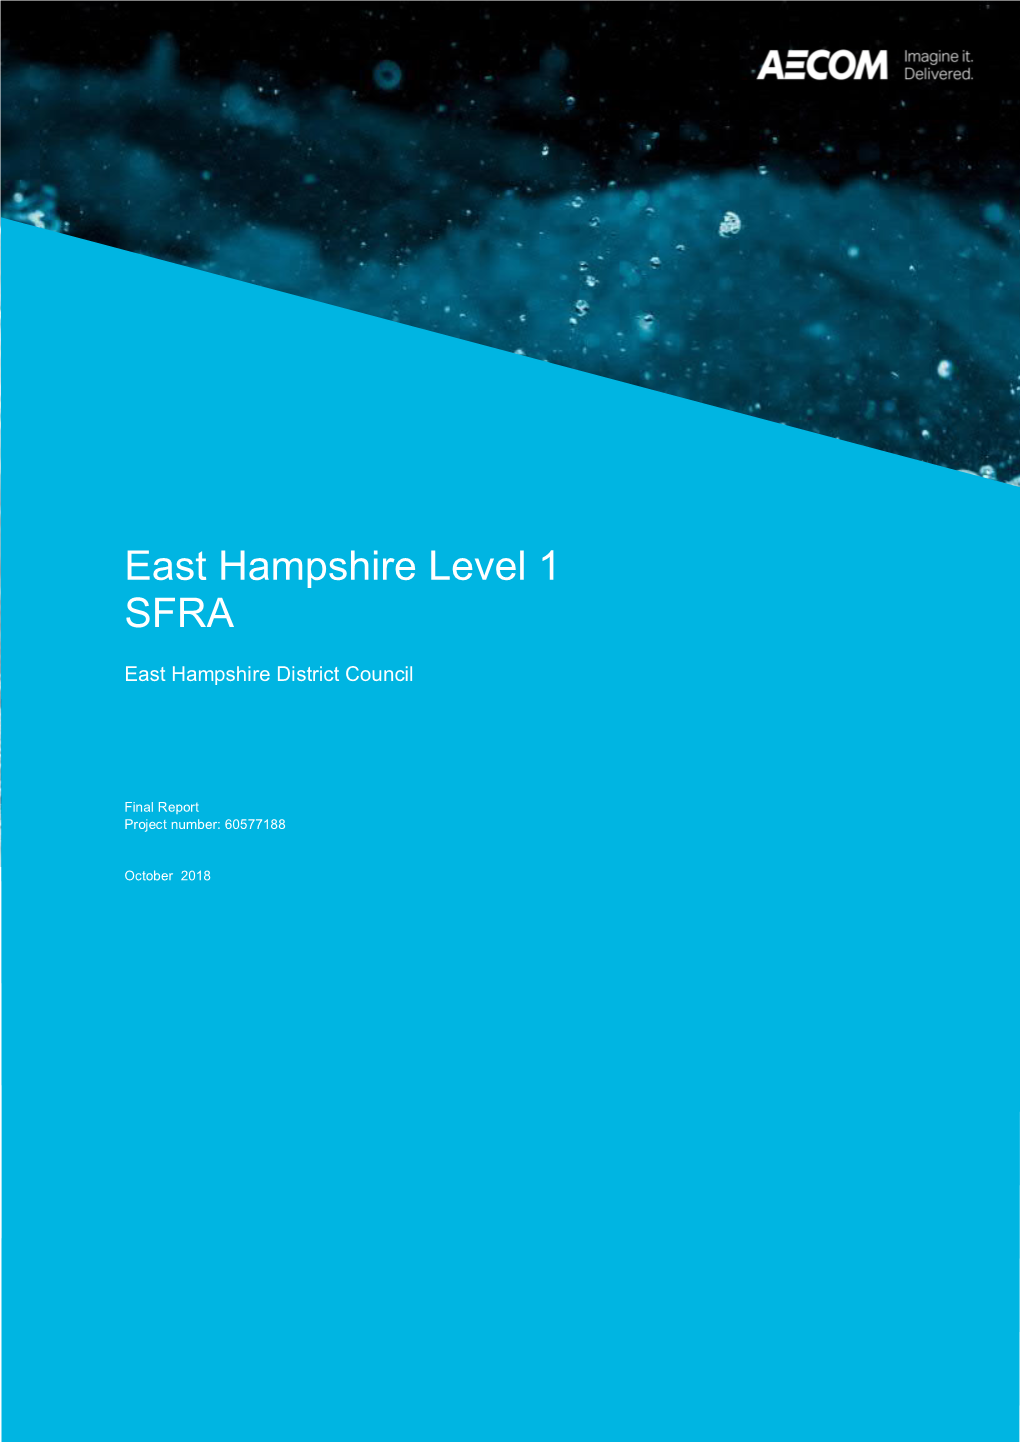 East Hampshire Level 1 SFRA